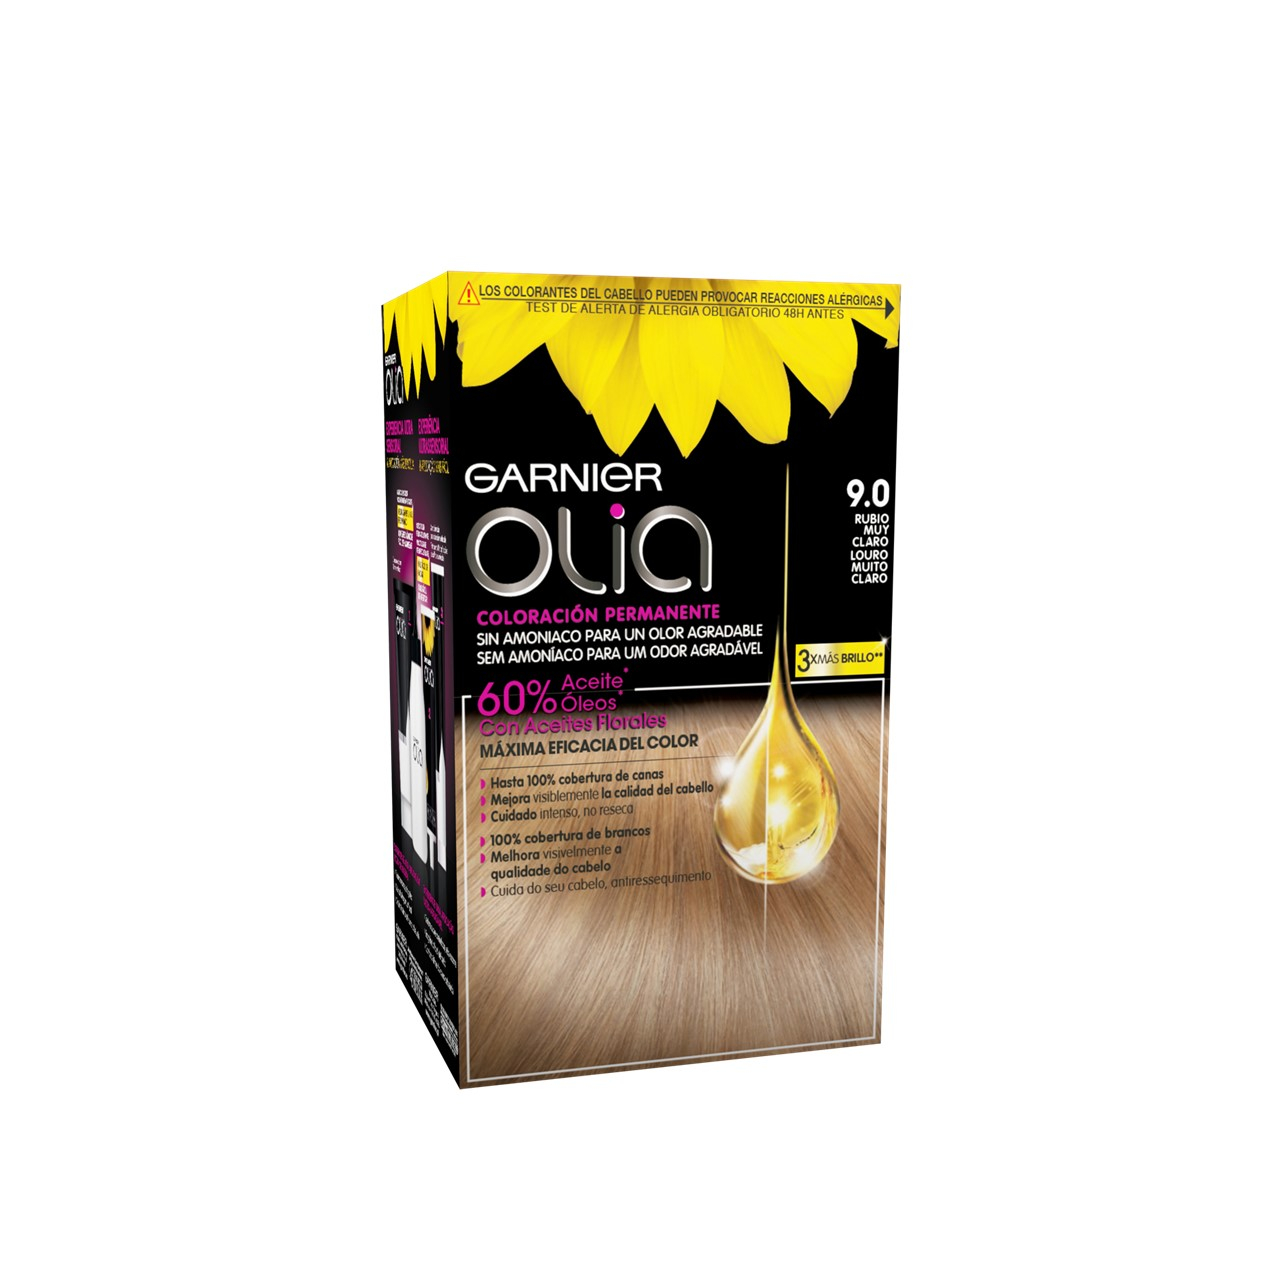 Garnier Olia 9.0 Permanent Hair Dye